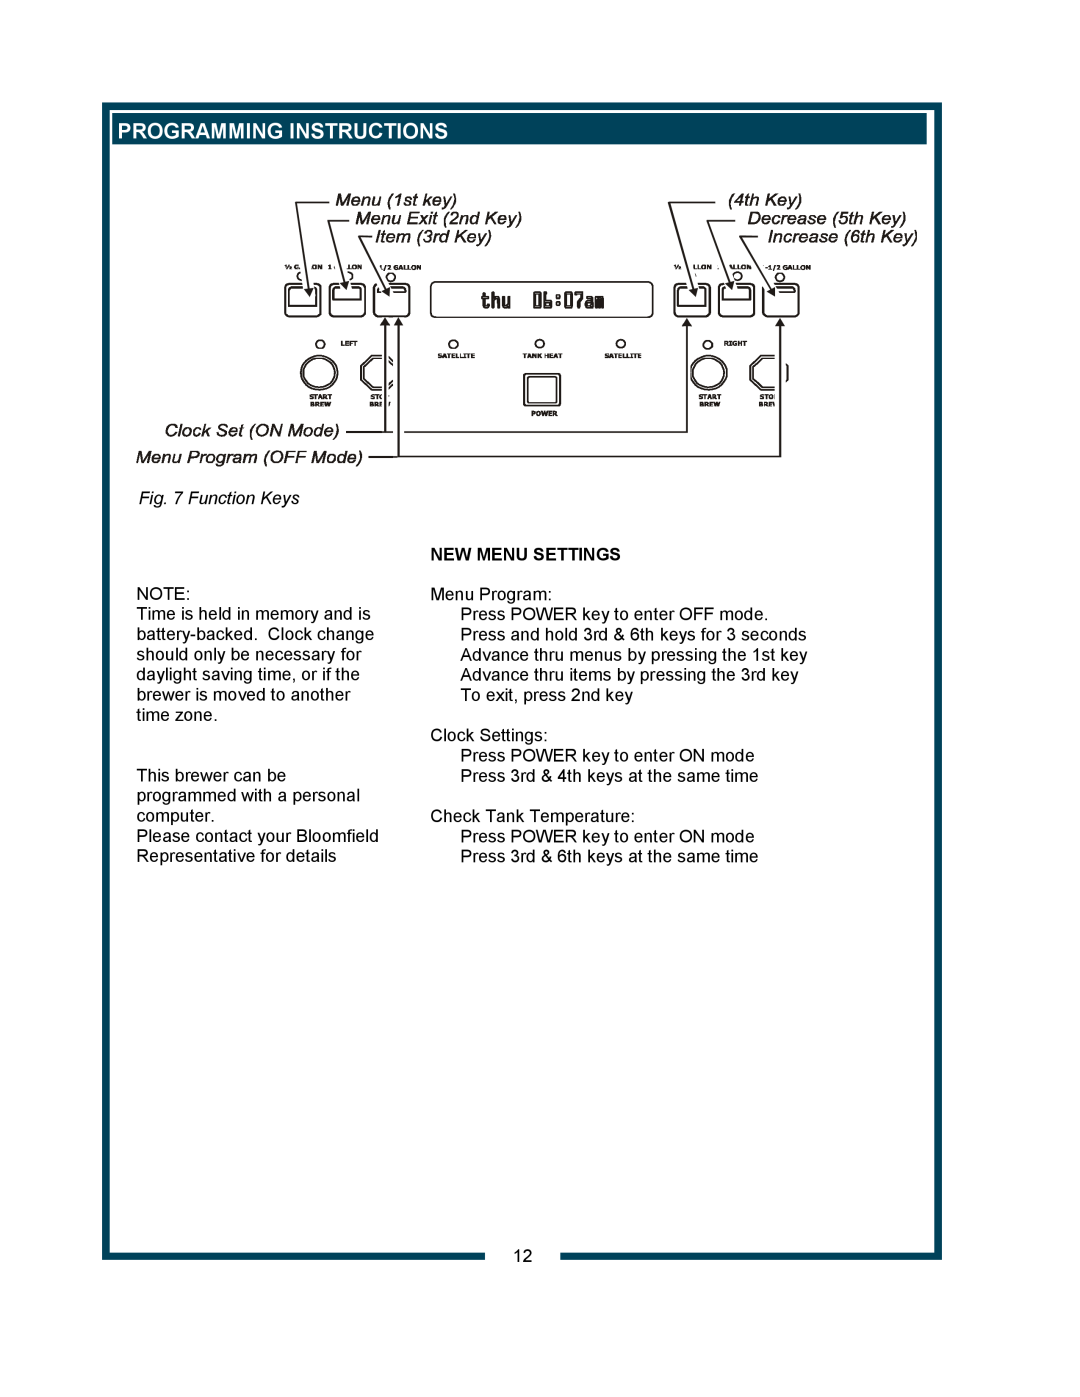 Bloomfield 9421 (SS2-HE) owner manual Programming Instructions, New Menu Settings 